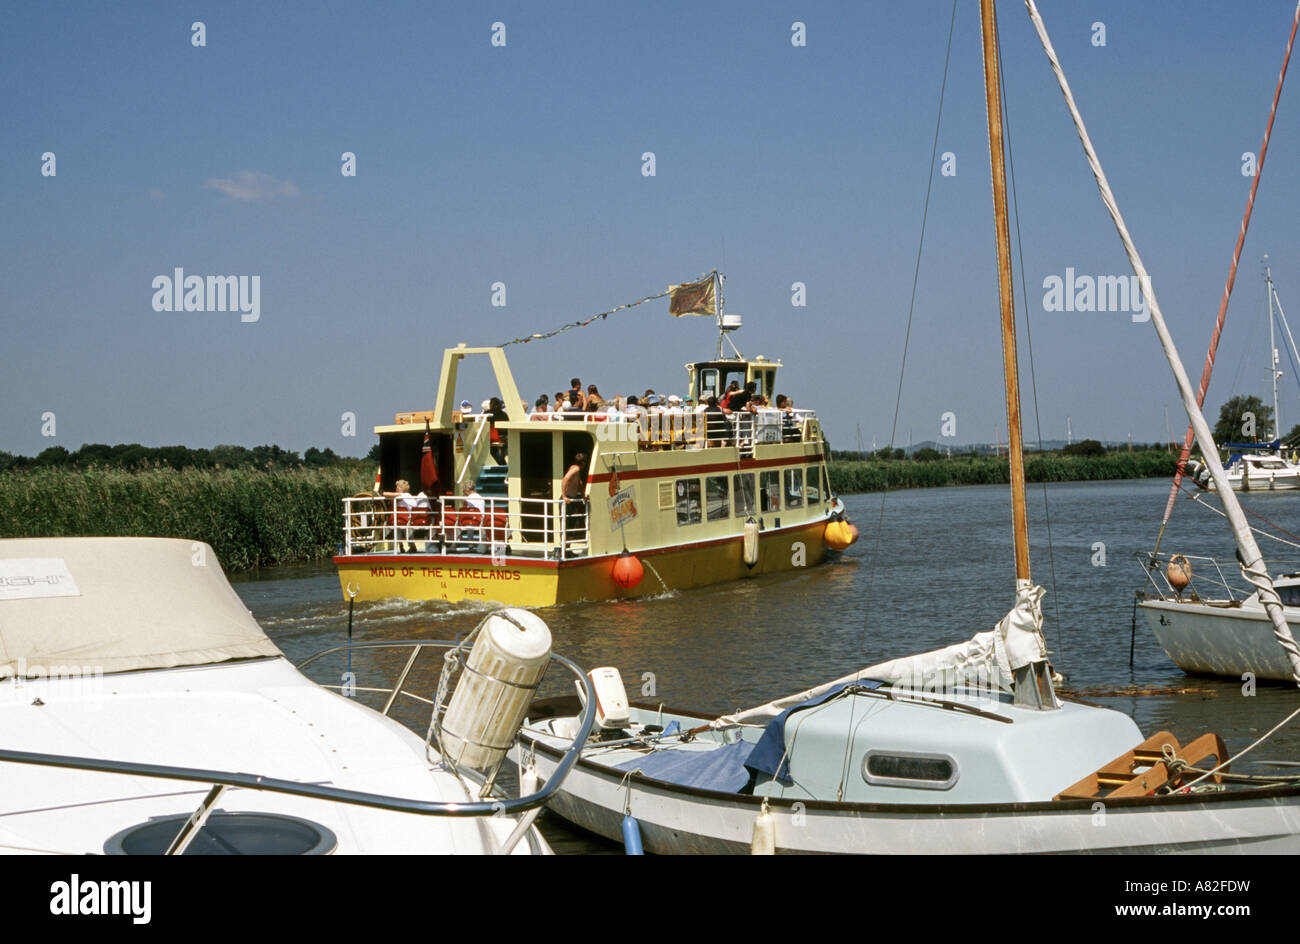 Pleasure boat 'Maid of the Lakelands' on the River Frome near Wareham, Dorset Stock Photo